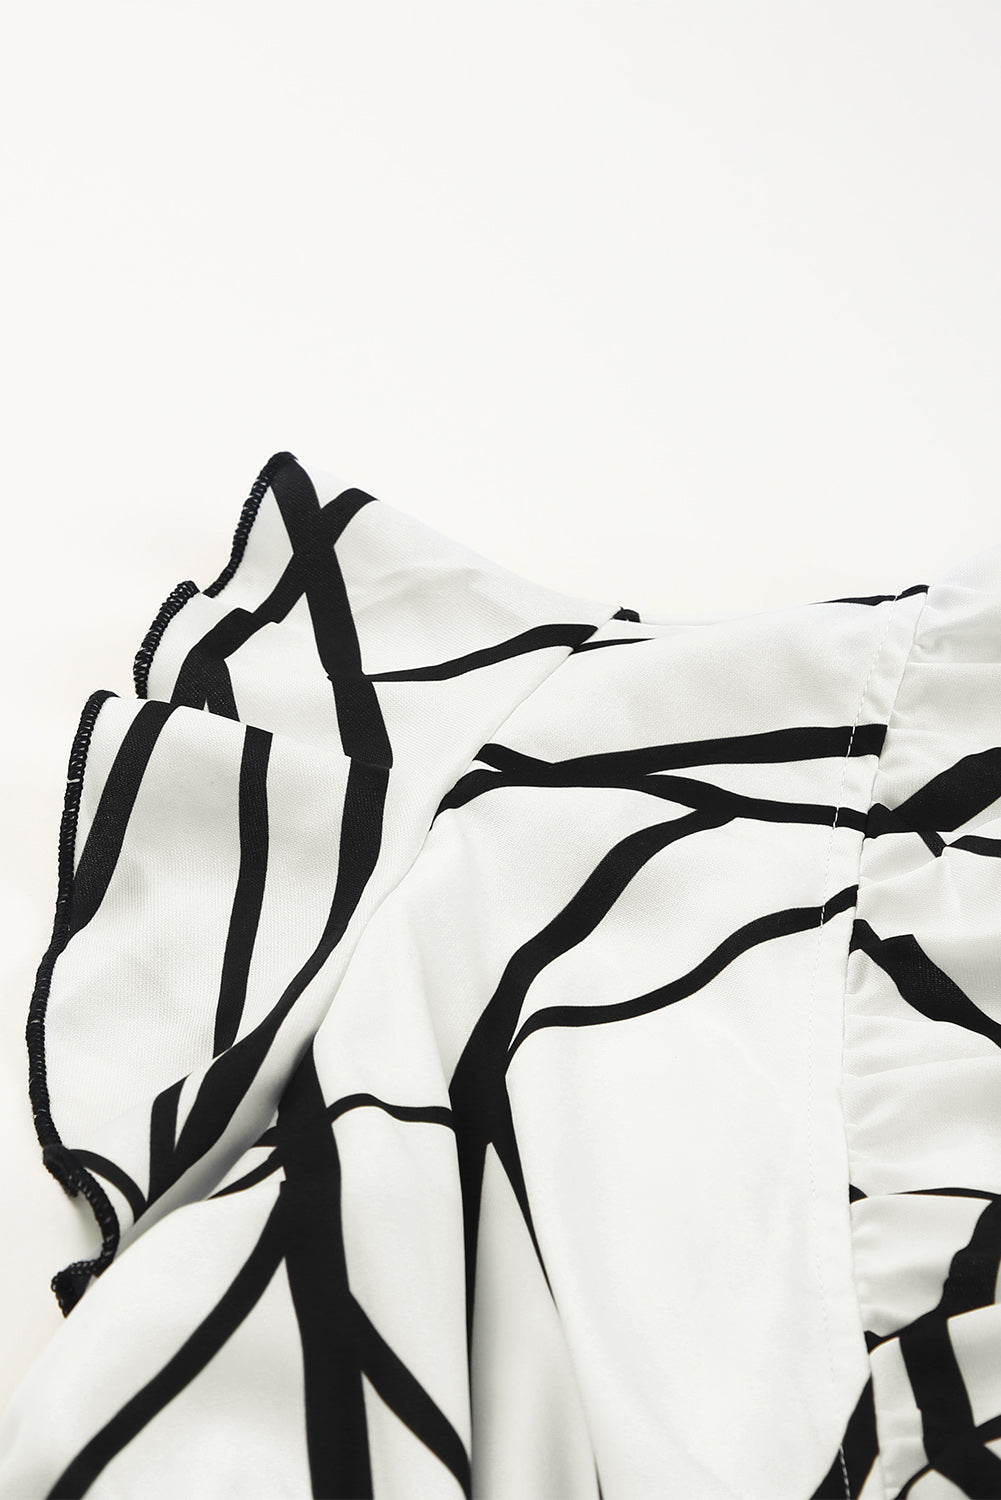 White Abstract Print V Neck Ruffle Maxi Dress